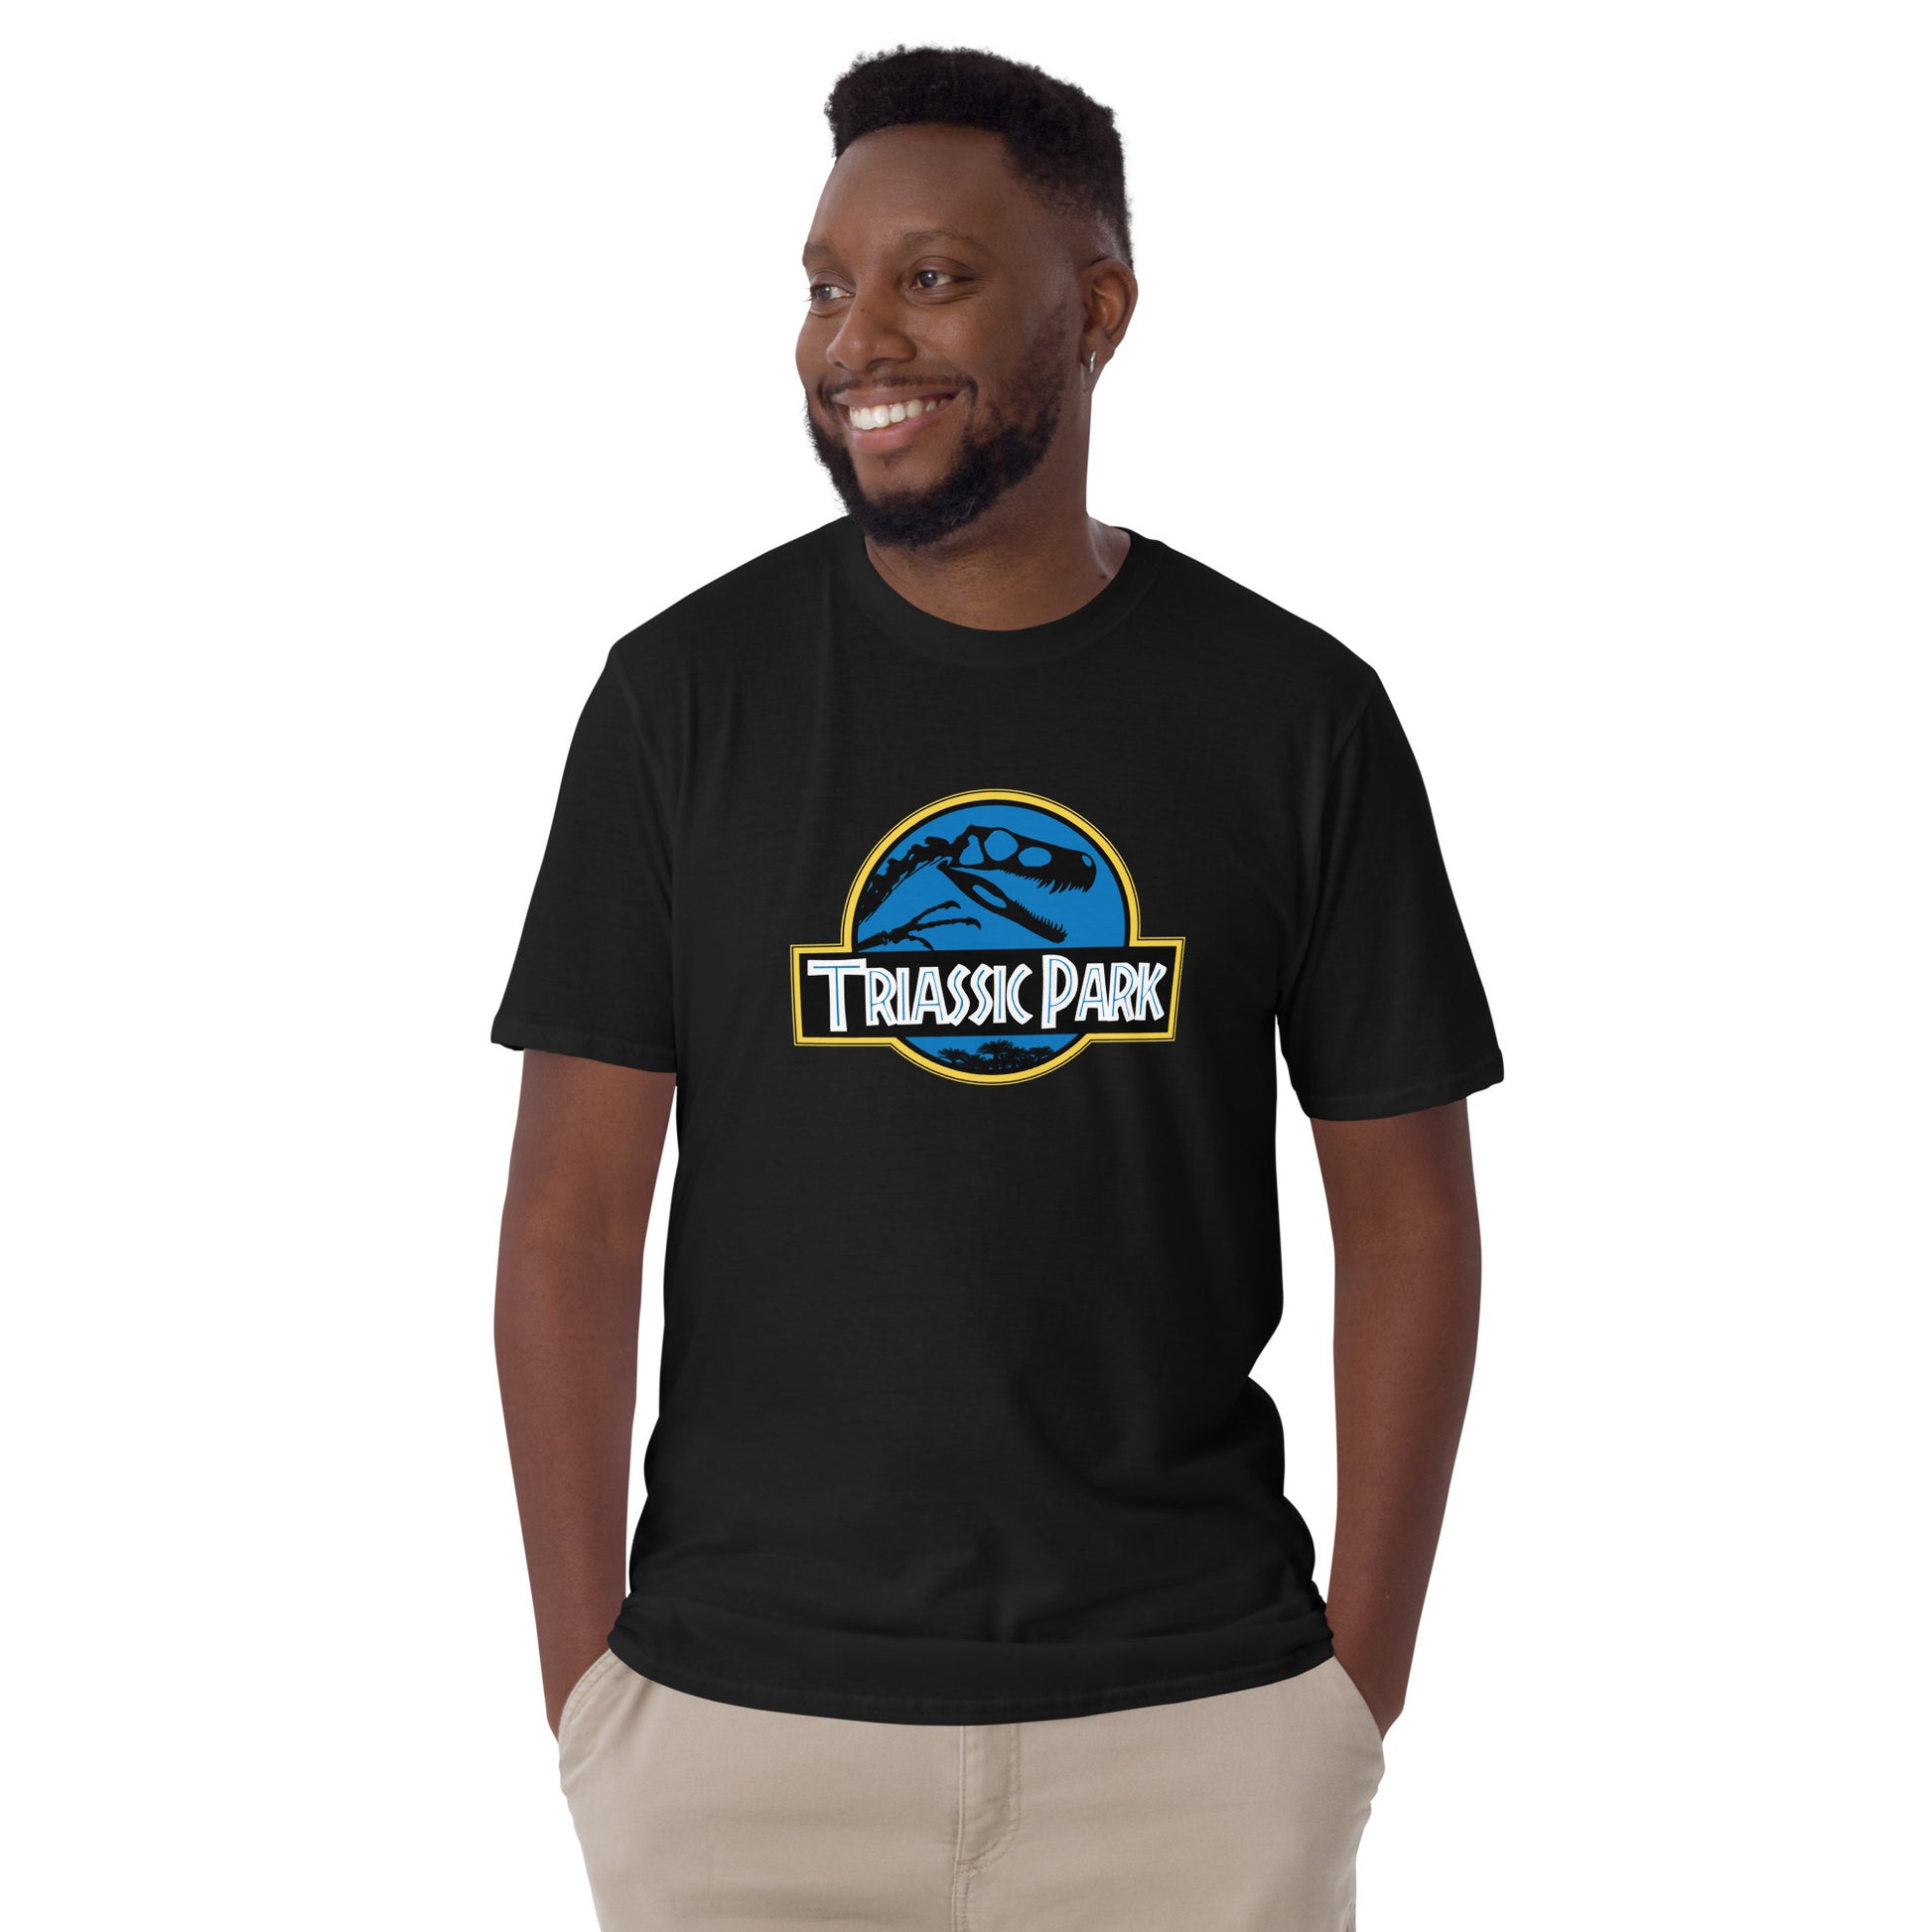 Triassic Park Black Unisex Short Sleeve T-Shirt Mockup